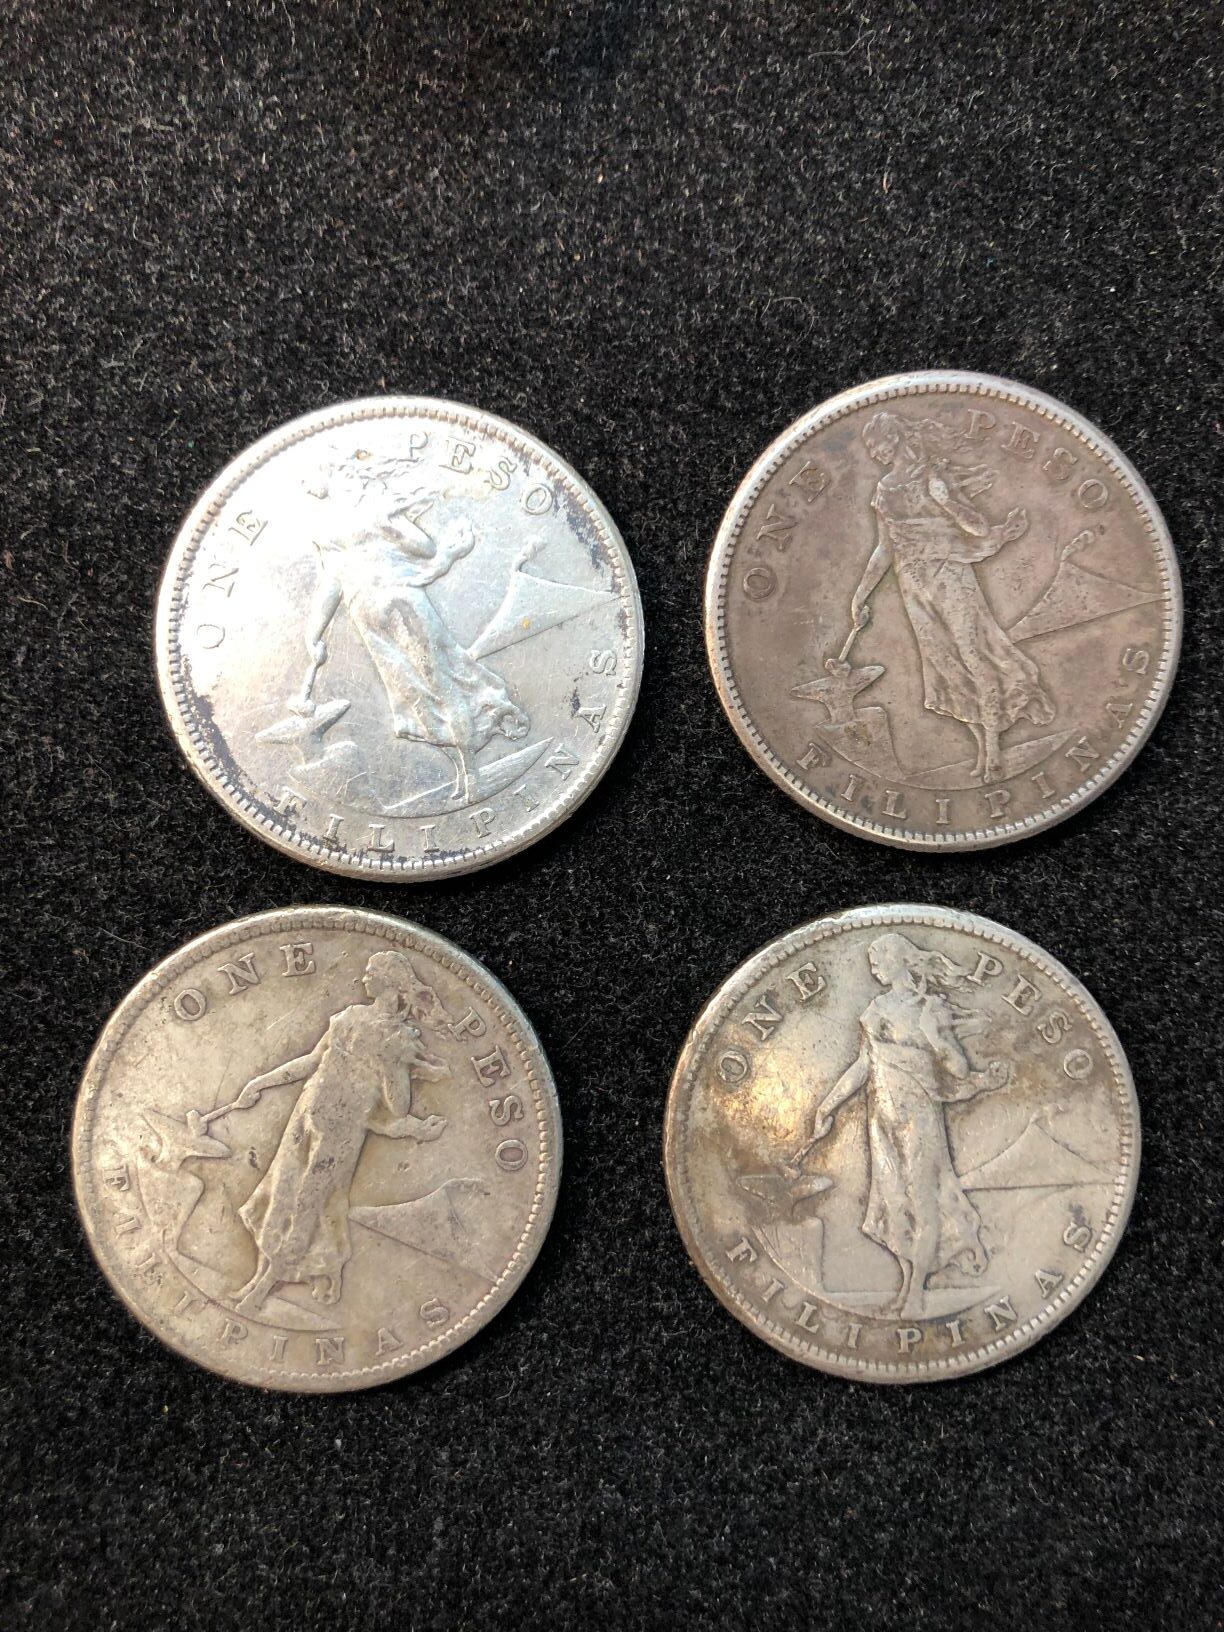 America’s Lost Silver dollar 1907 Philippine peso - Steinmetz Coins ...